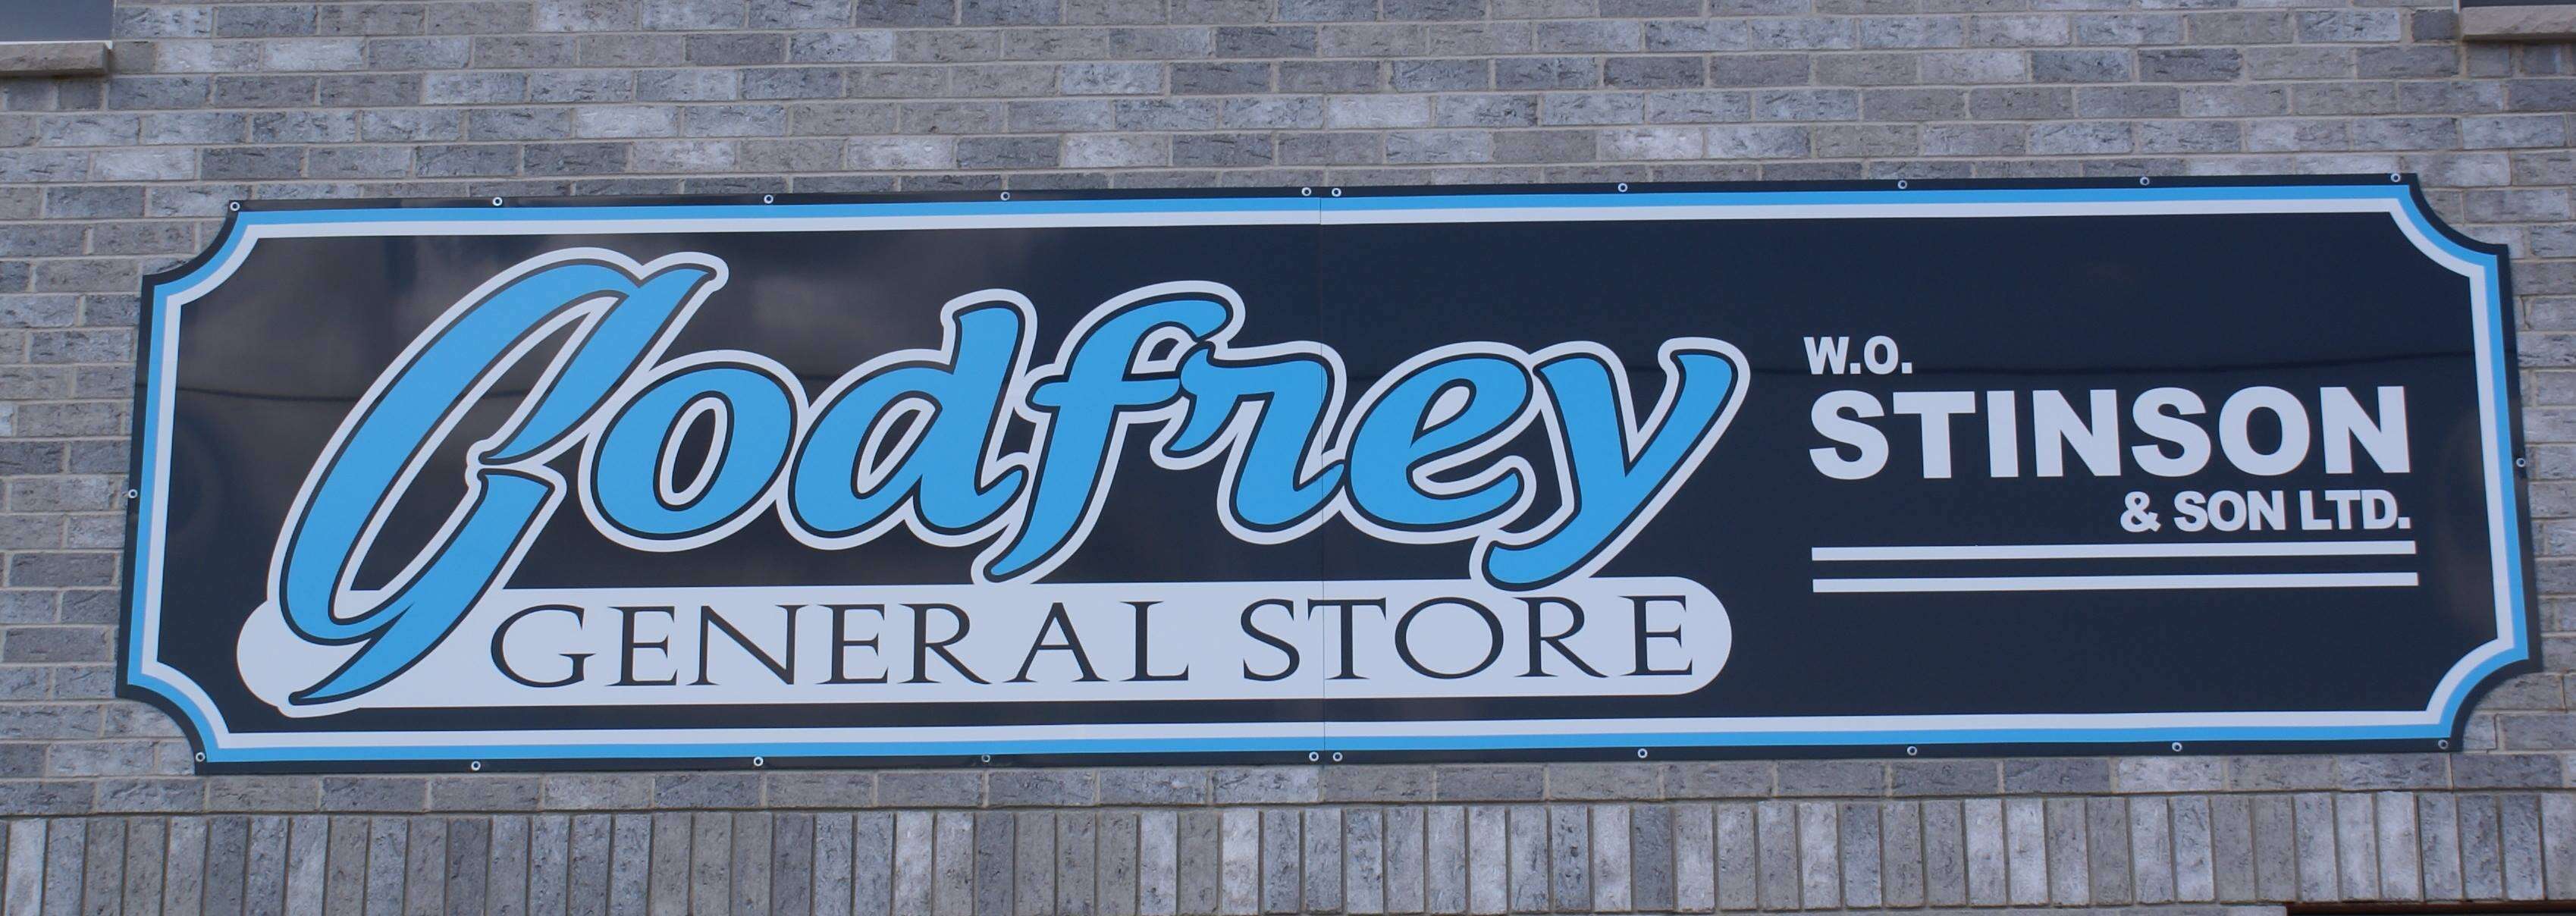 Godfrey General Store